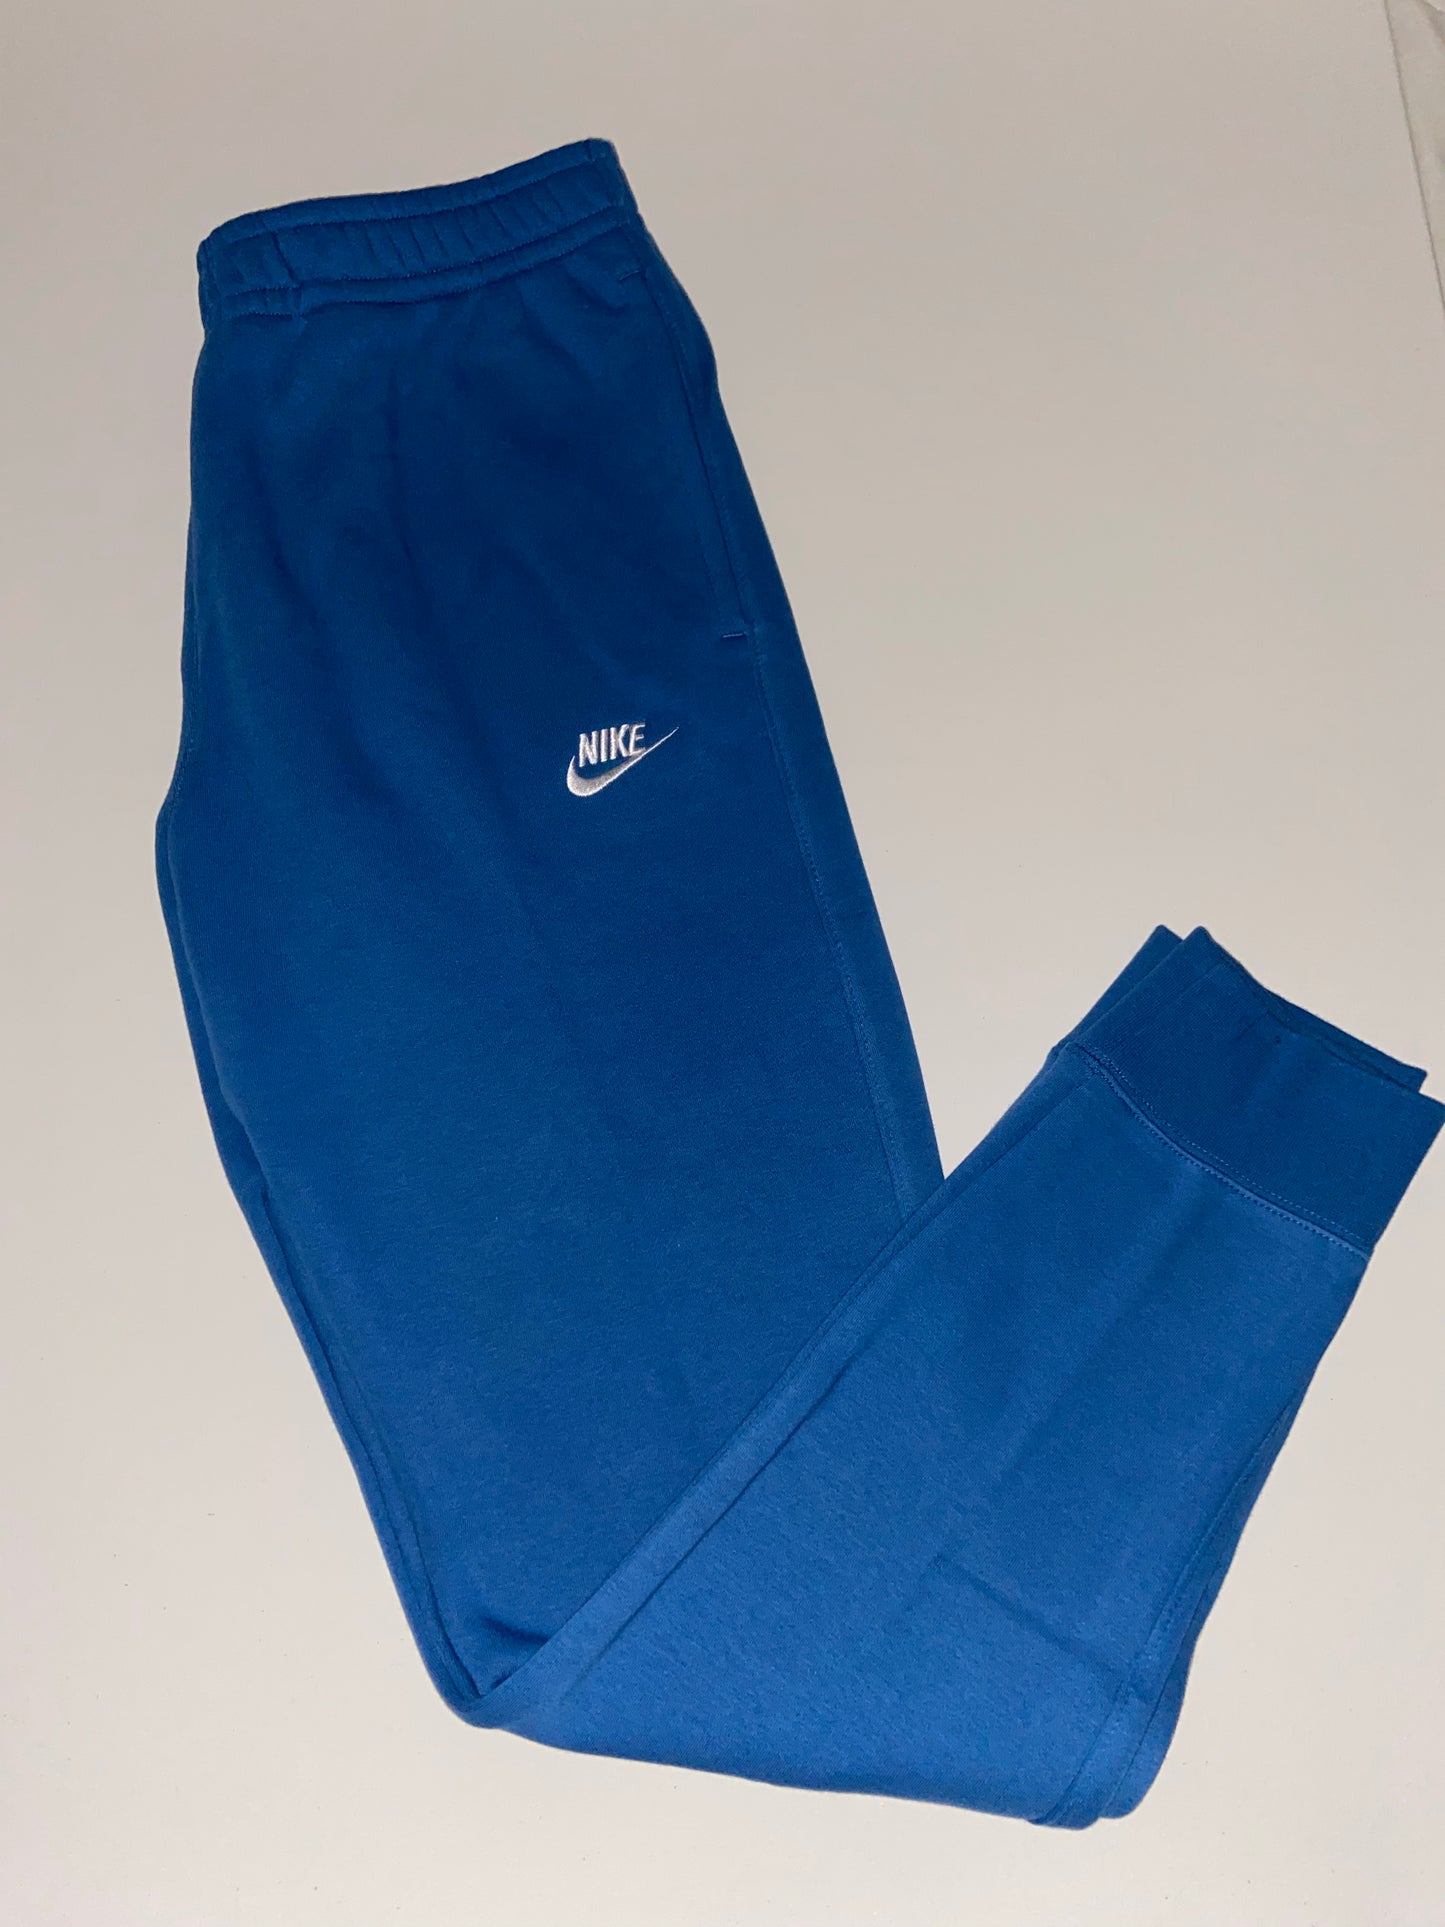 Ensemble Nike fleece bleu électrique💙